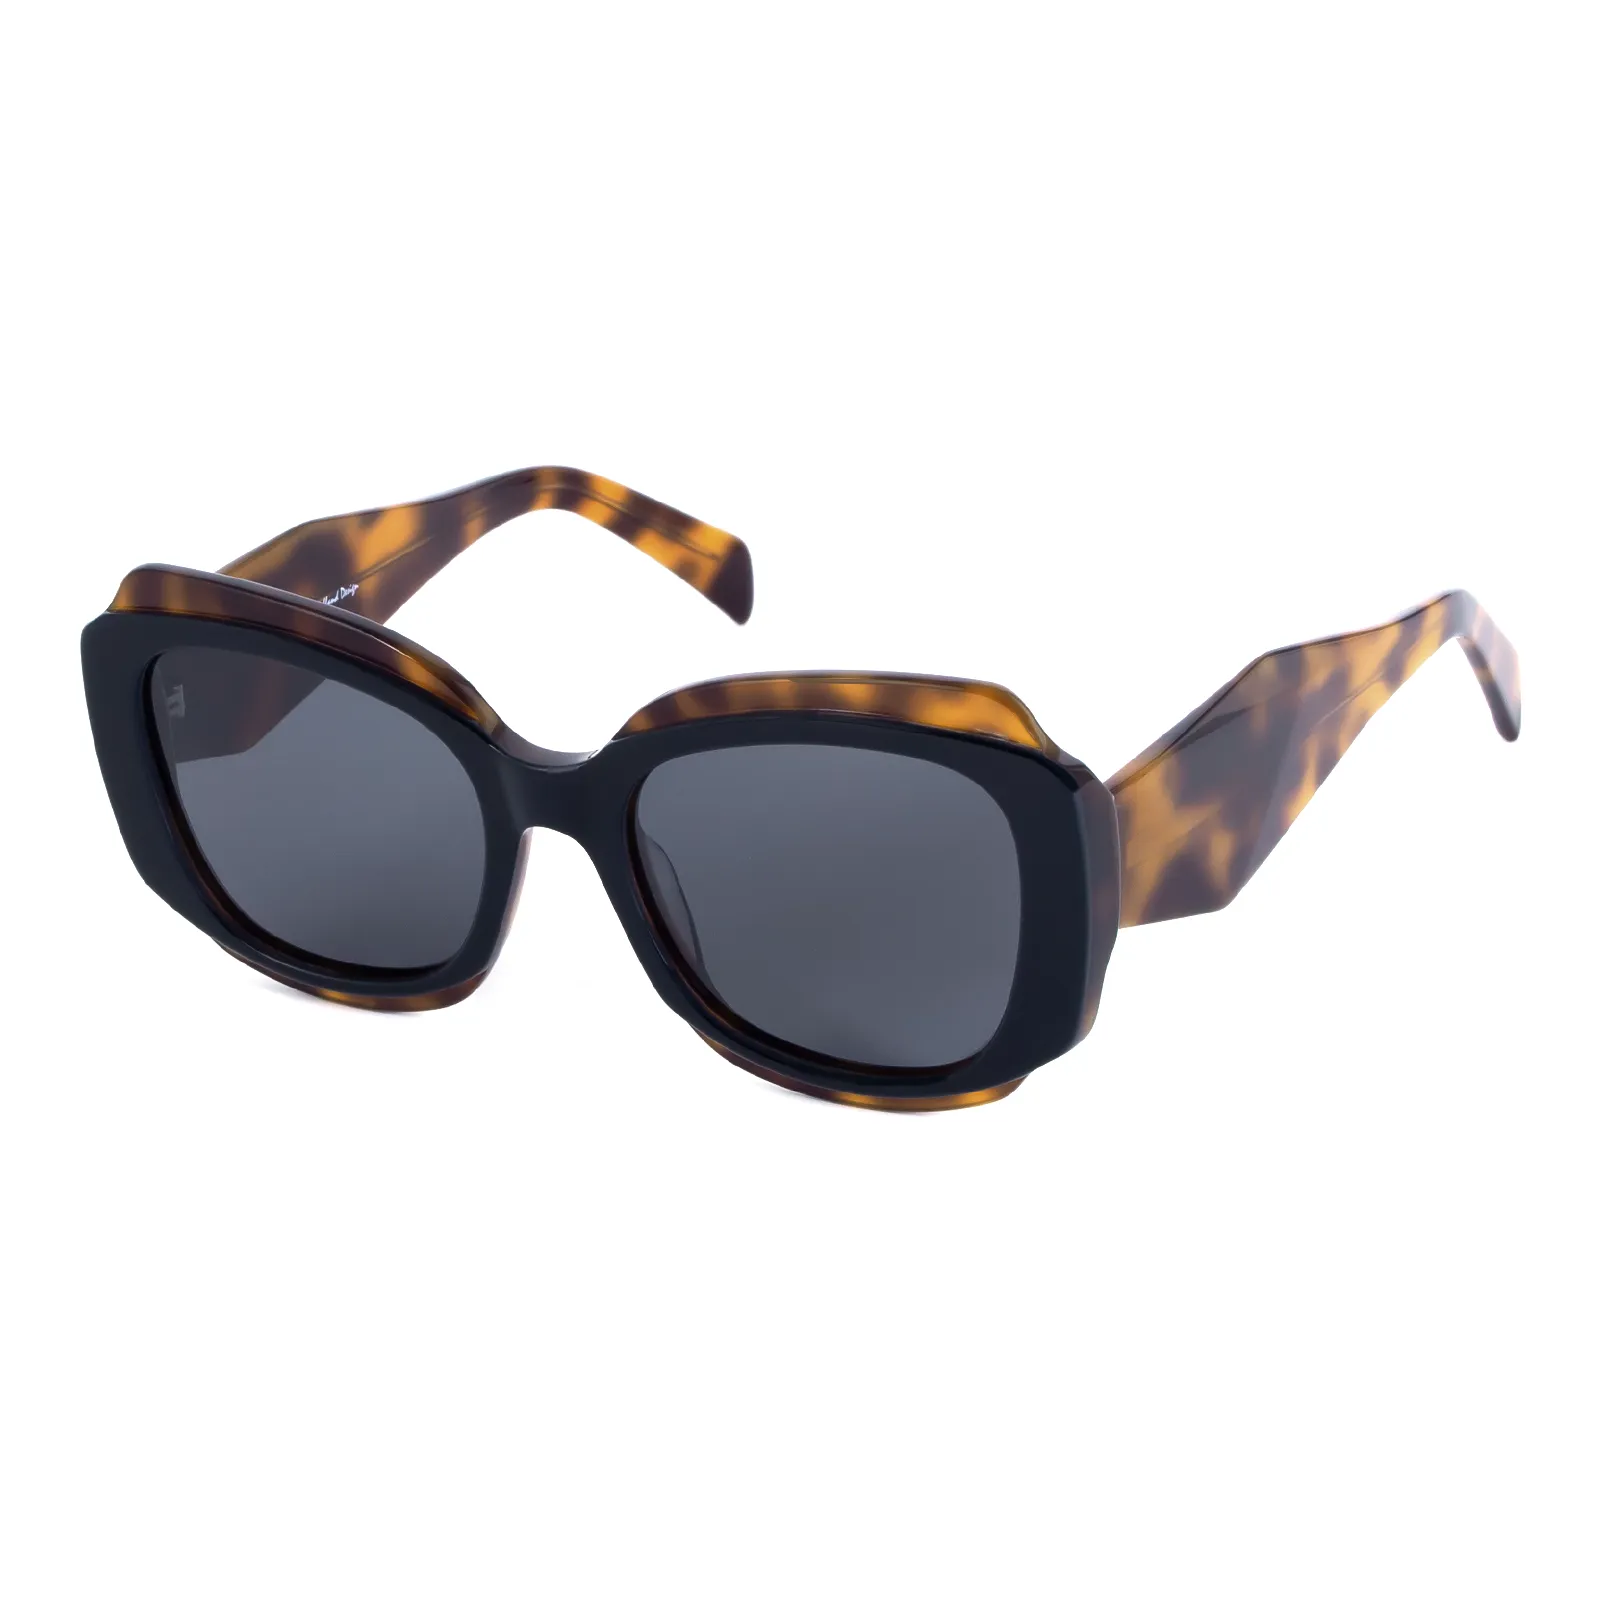 Rosemary - Square Tortoisehell Sunglasses for Women